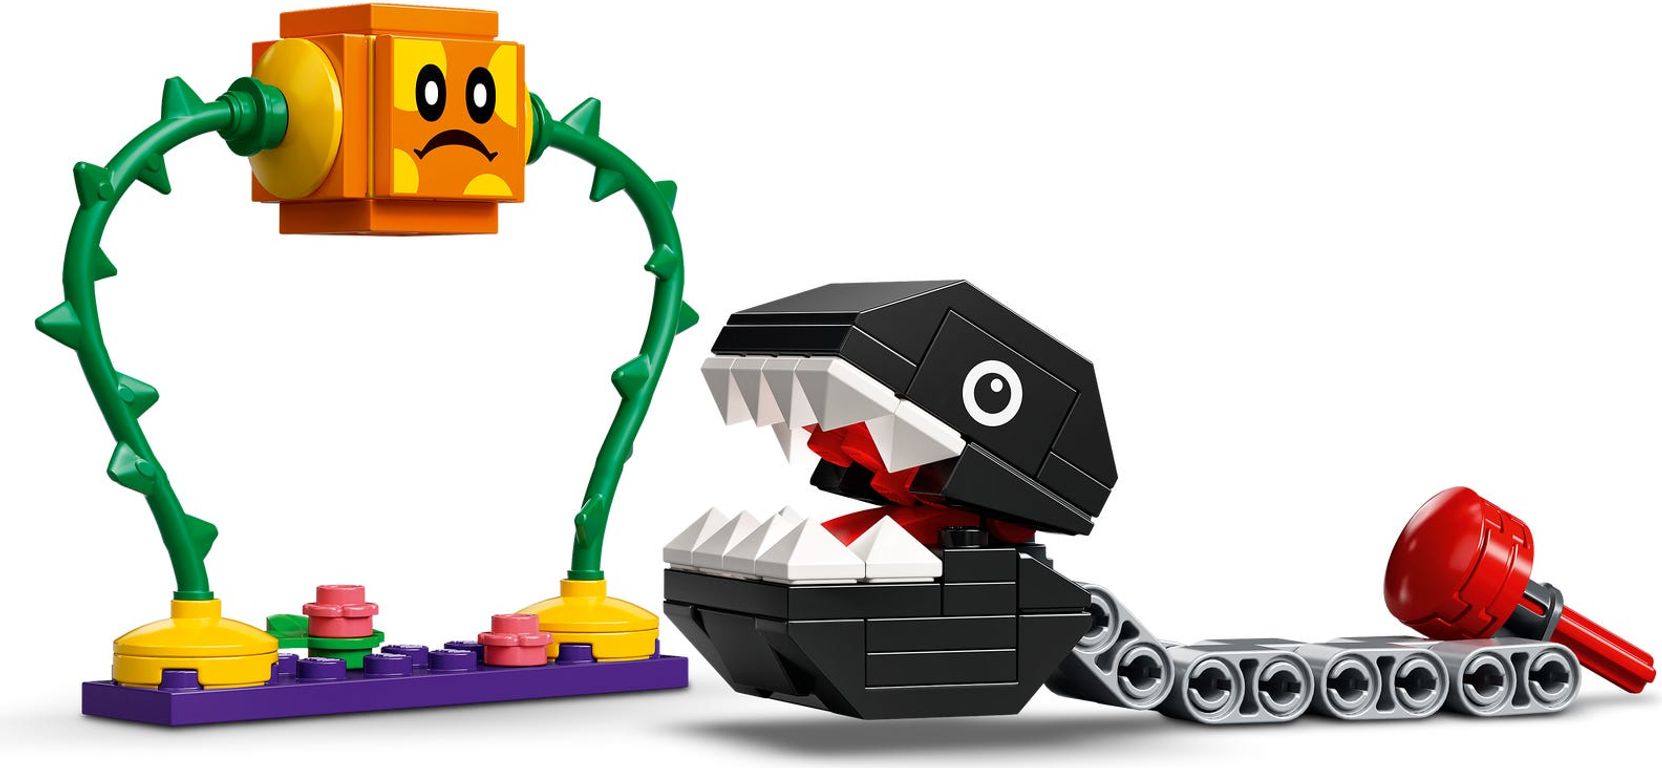 LEGO® Super Mario™ Chain Chomp Jungle Encounter Expansion Set components